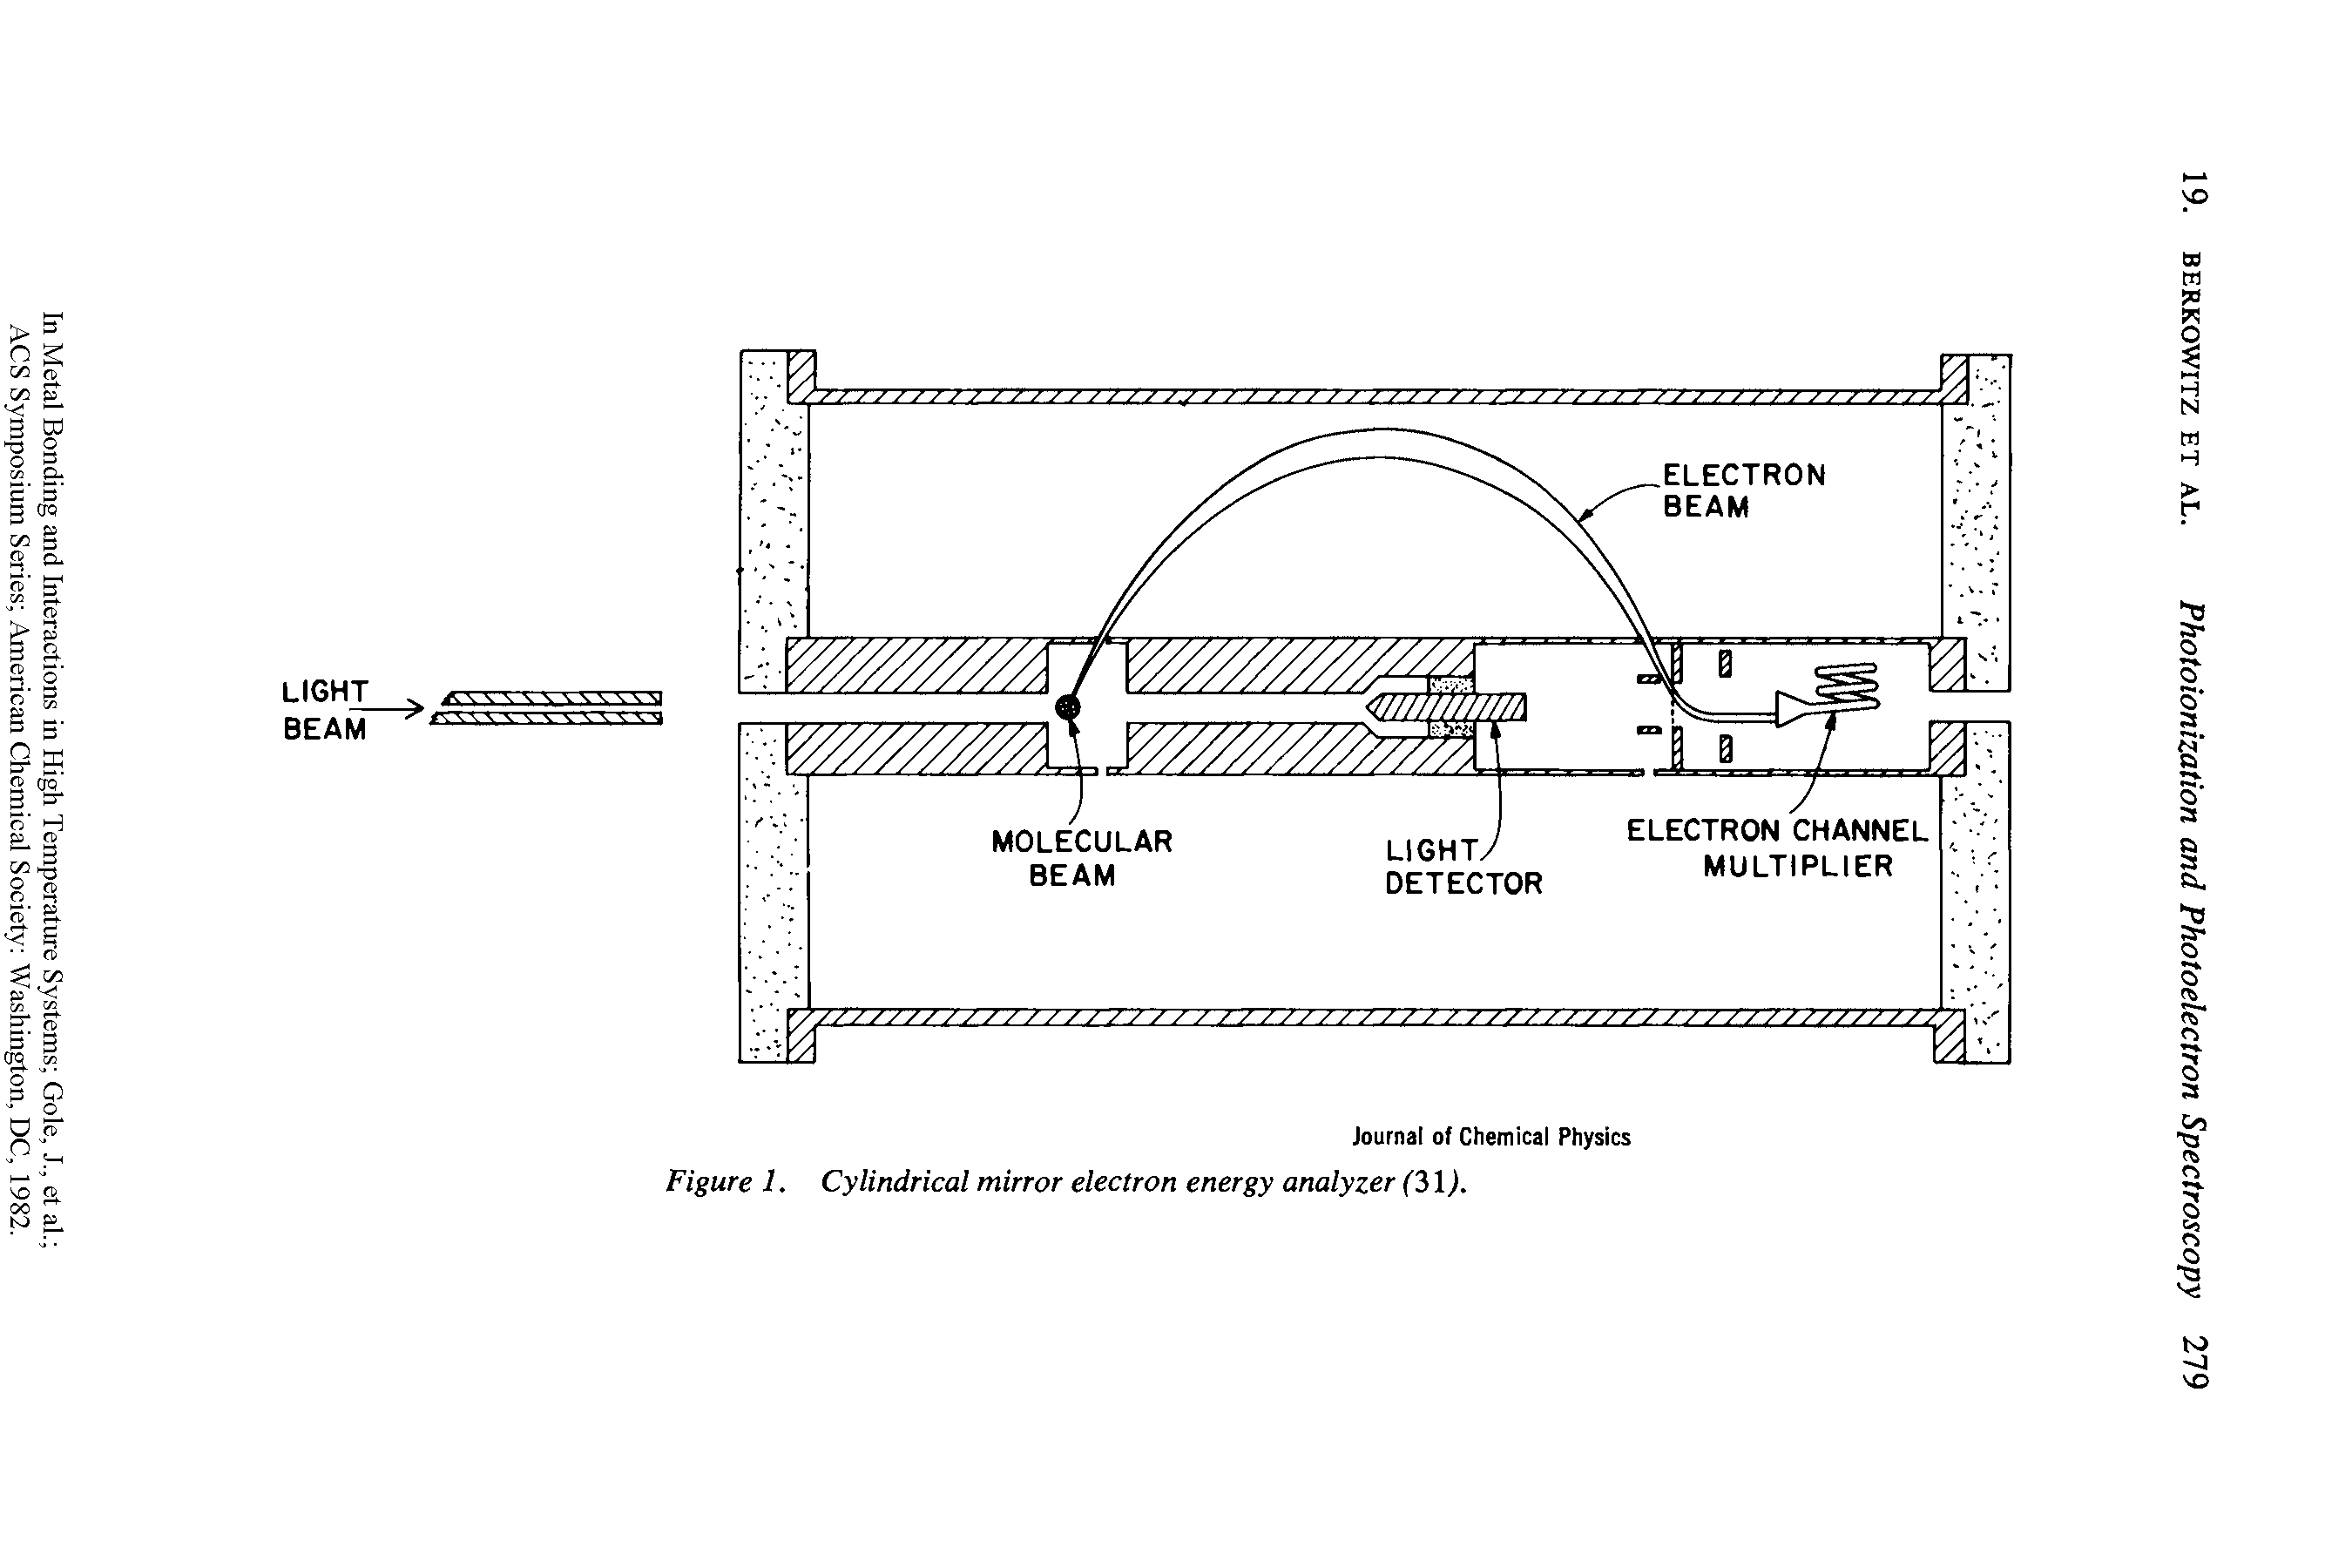 Figure 1. Cylindrical mirror electron energy analyzer (2> ).